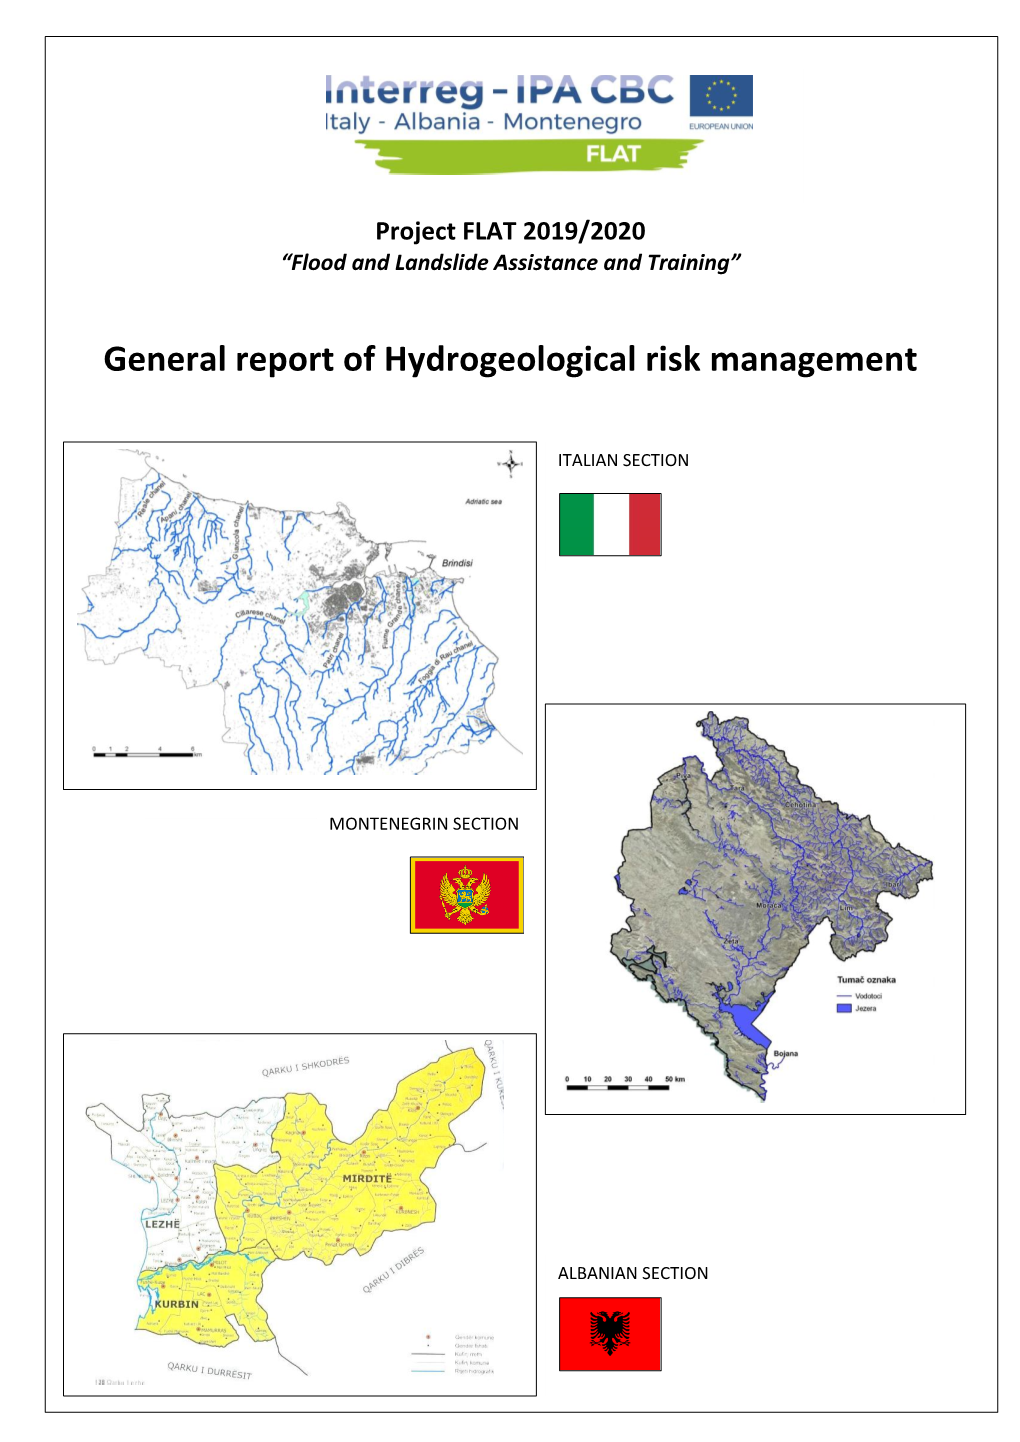 General Report of Hydrogeological Risk Management